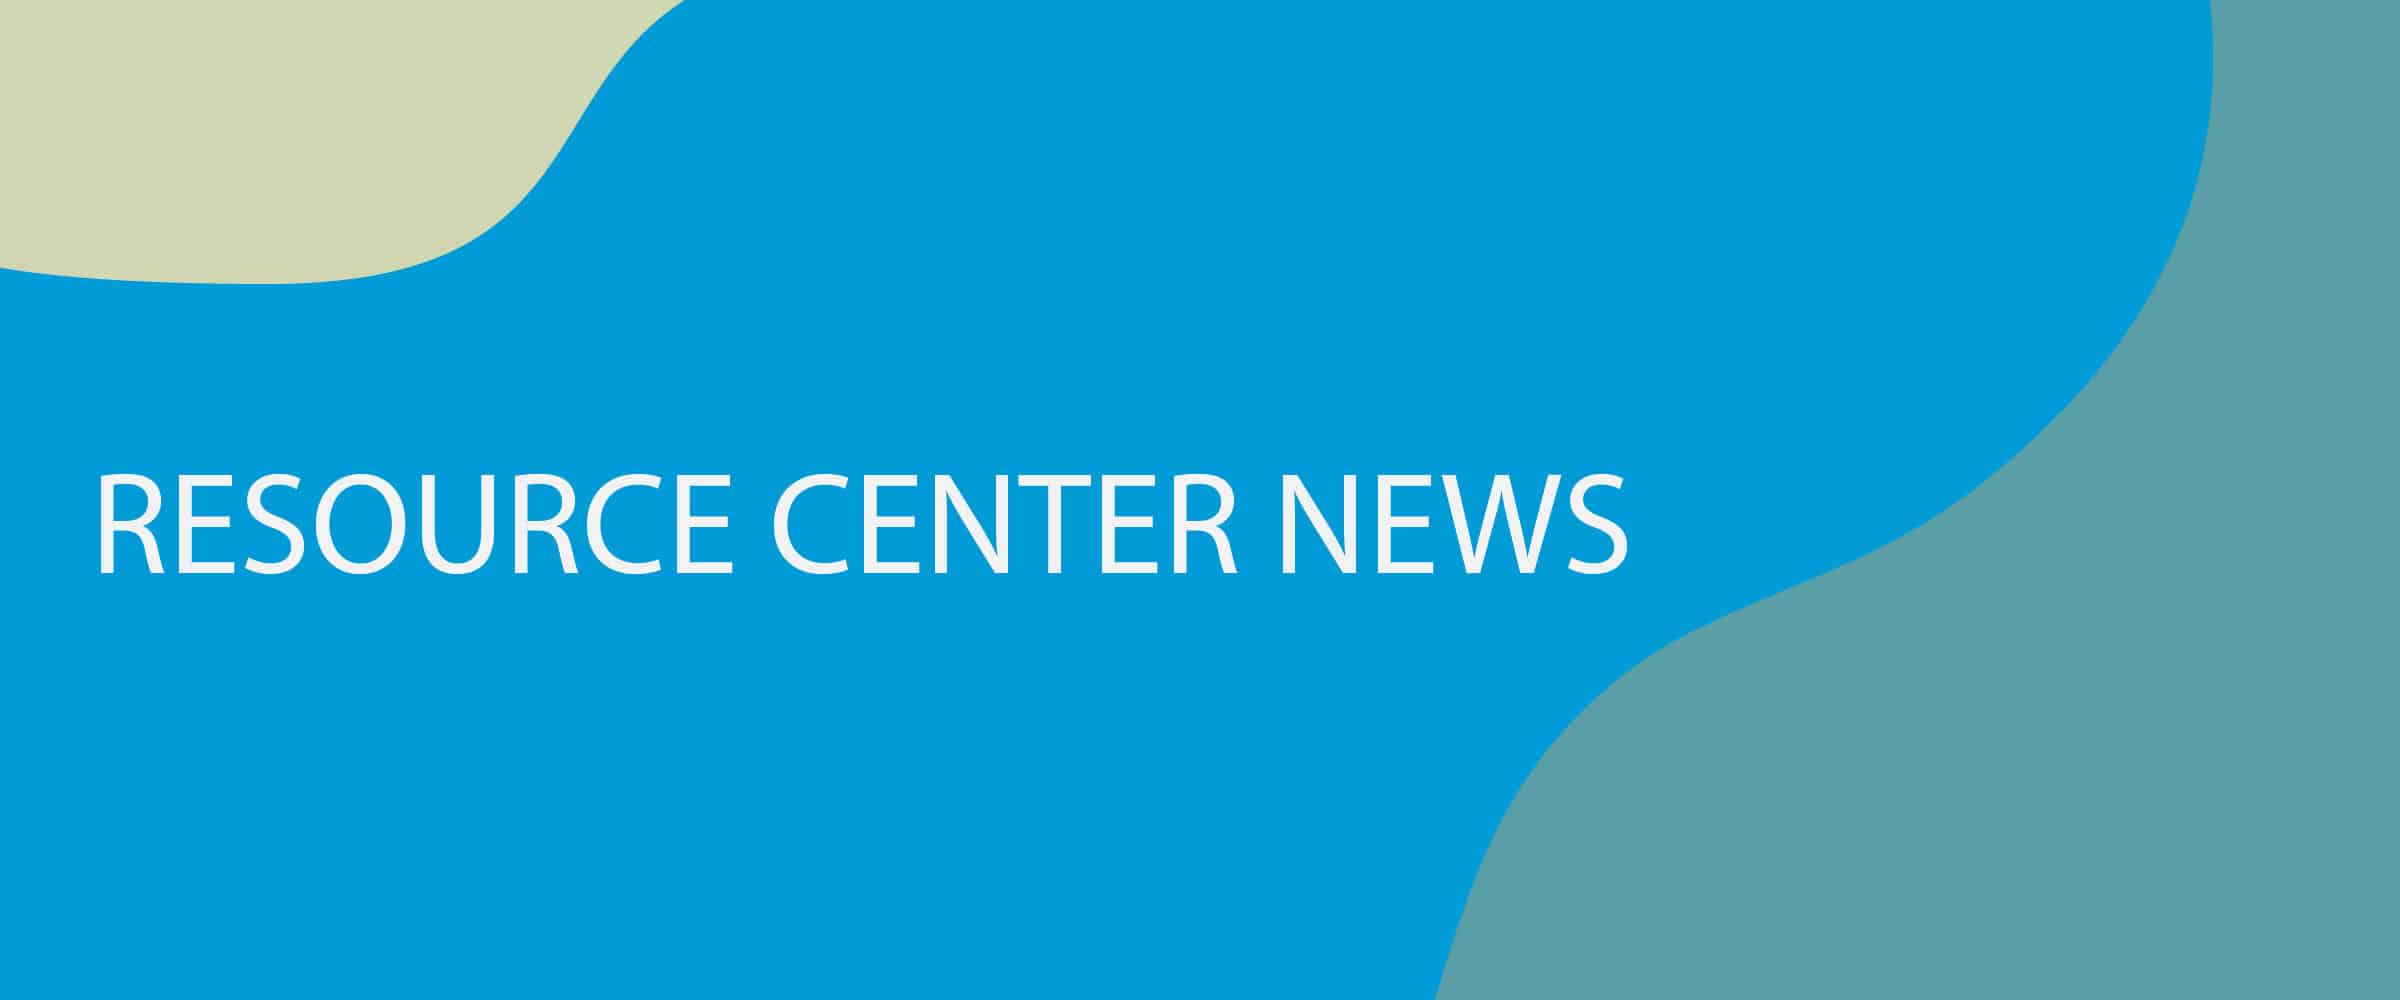 resource center news blog header 2021